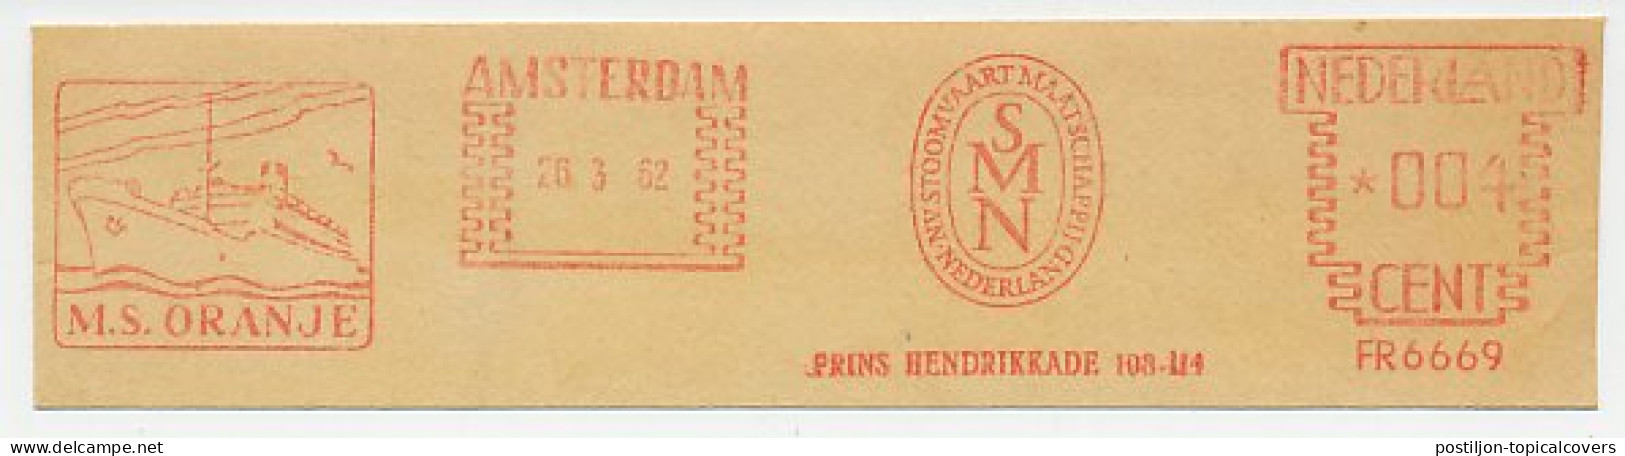 Meter Cut Netherlands 1962 SMN - Steamship Company Netherlands - M.S. Oranje - Ocean Liner - Schiffe